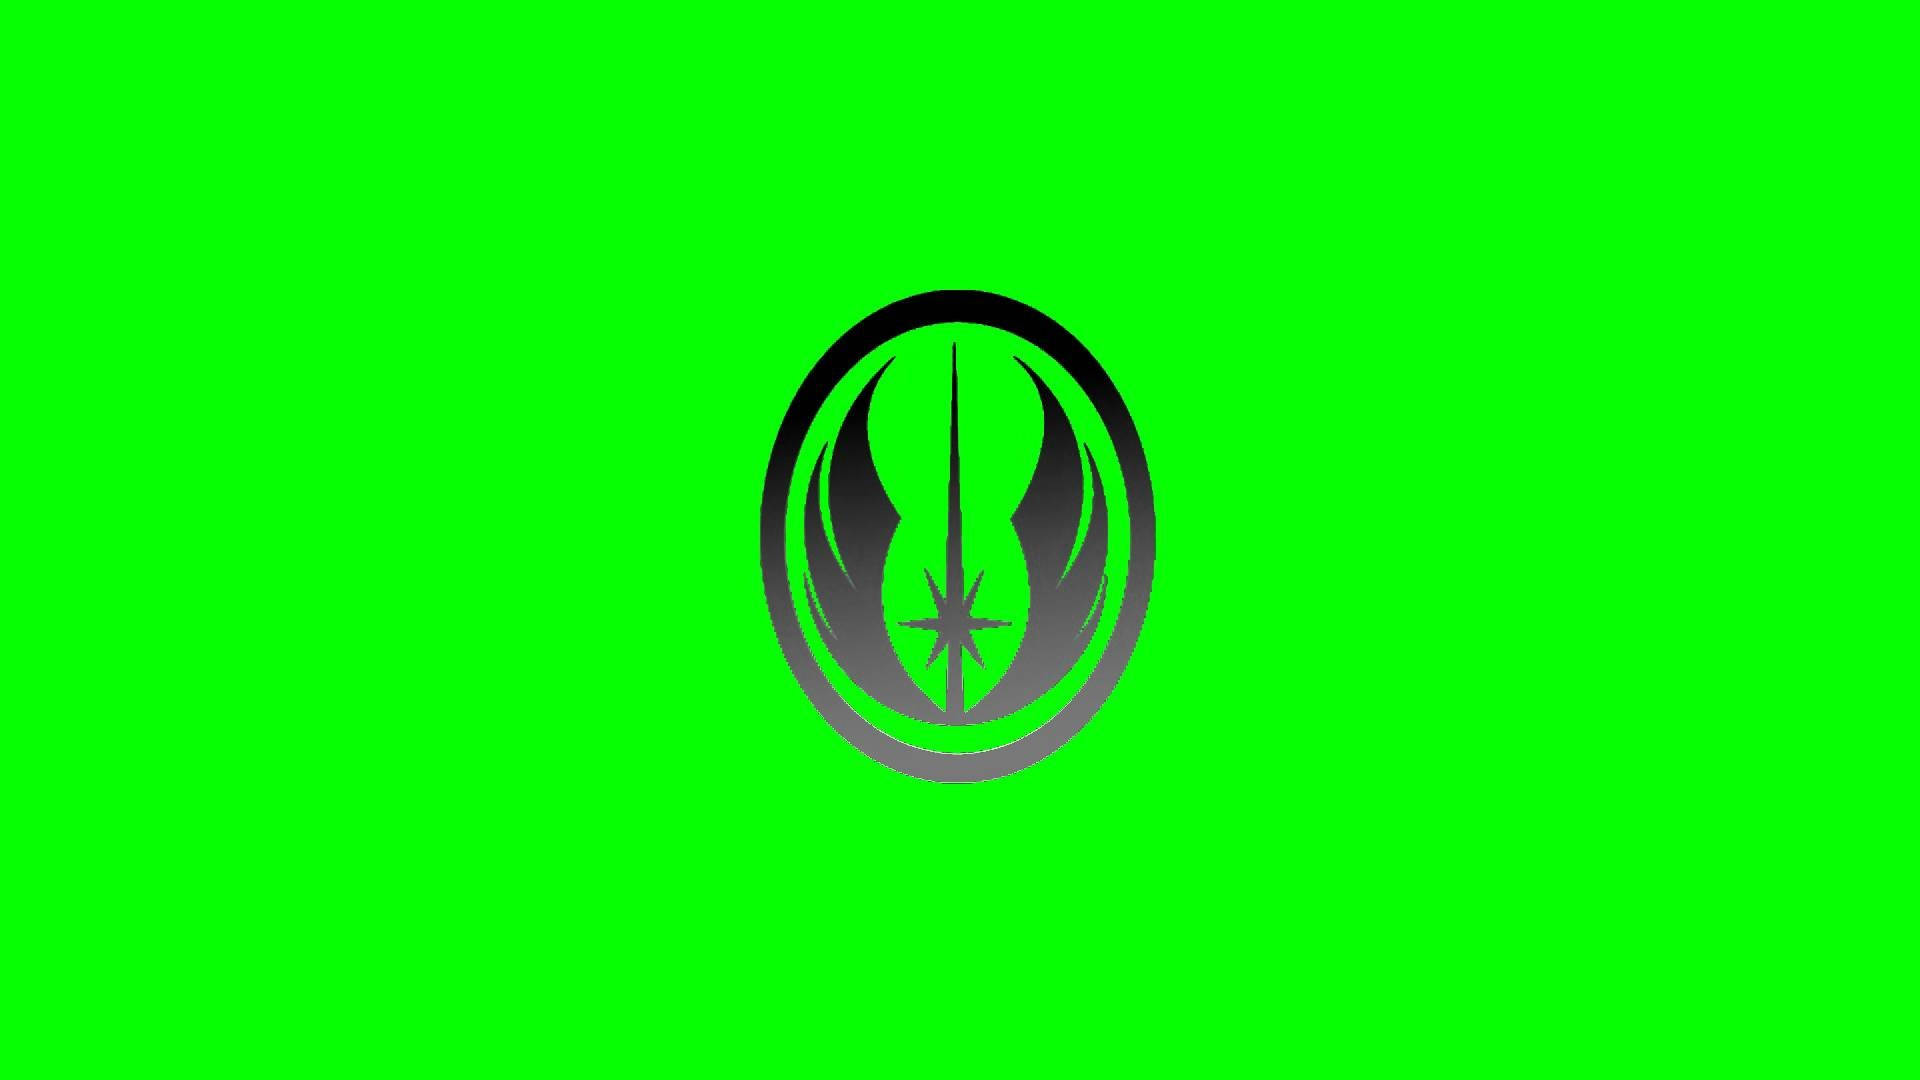 Download Green Screen Jedi Order Symbol Wallpaper 